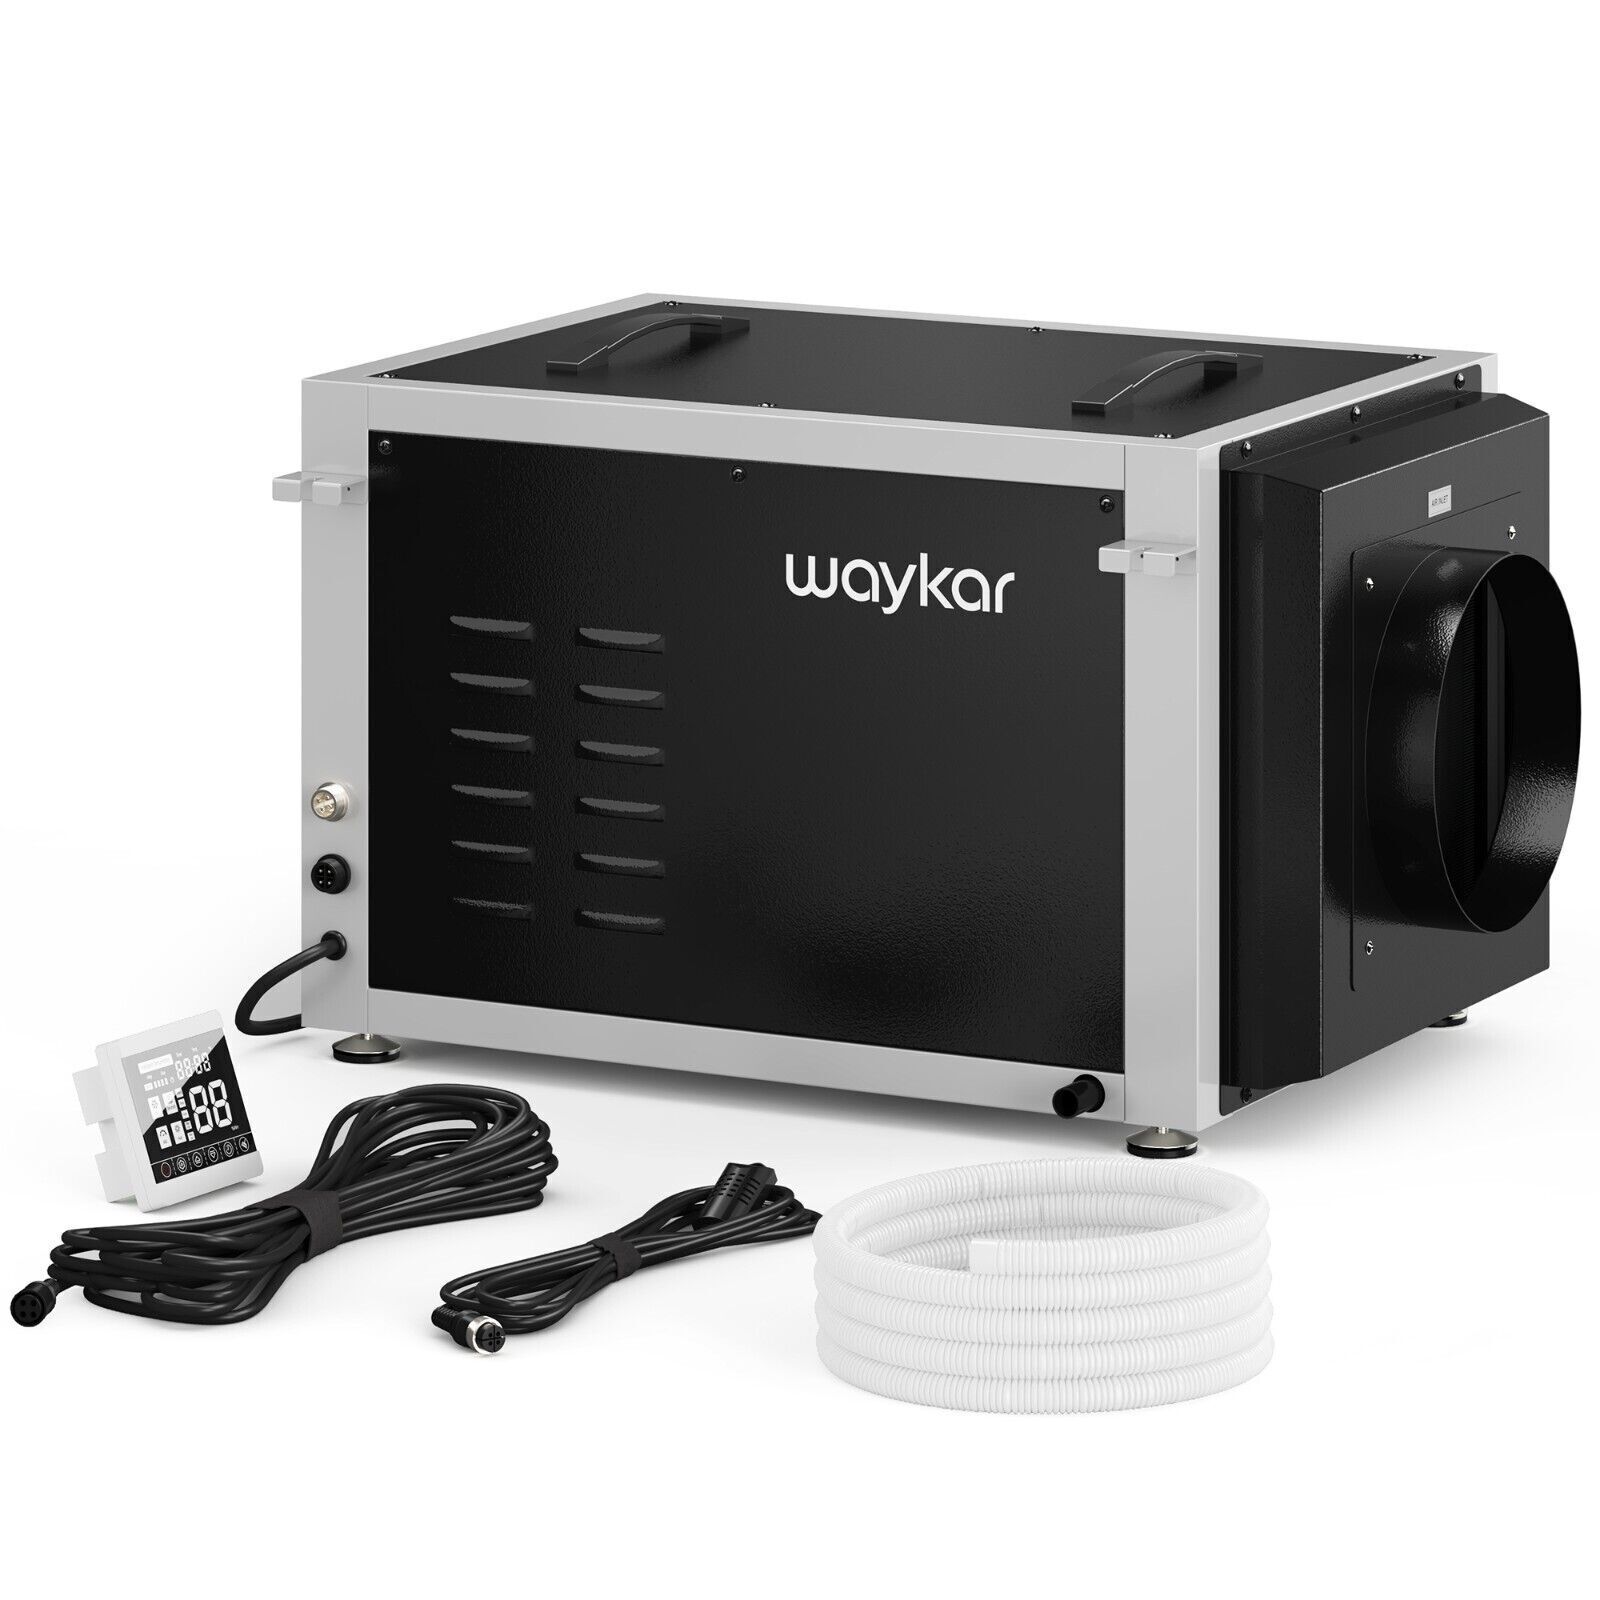 Waykar 158 Pint Commercial Dehumidifier for Crawl Space, Basement - Compact Size